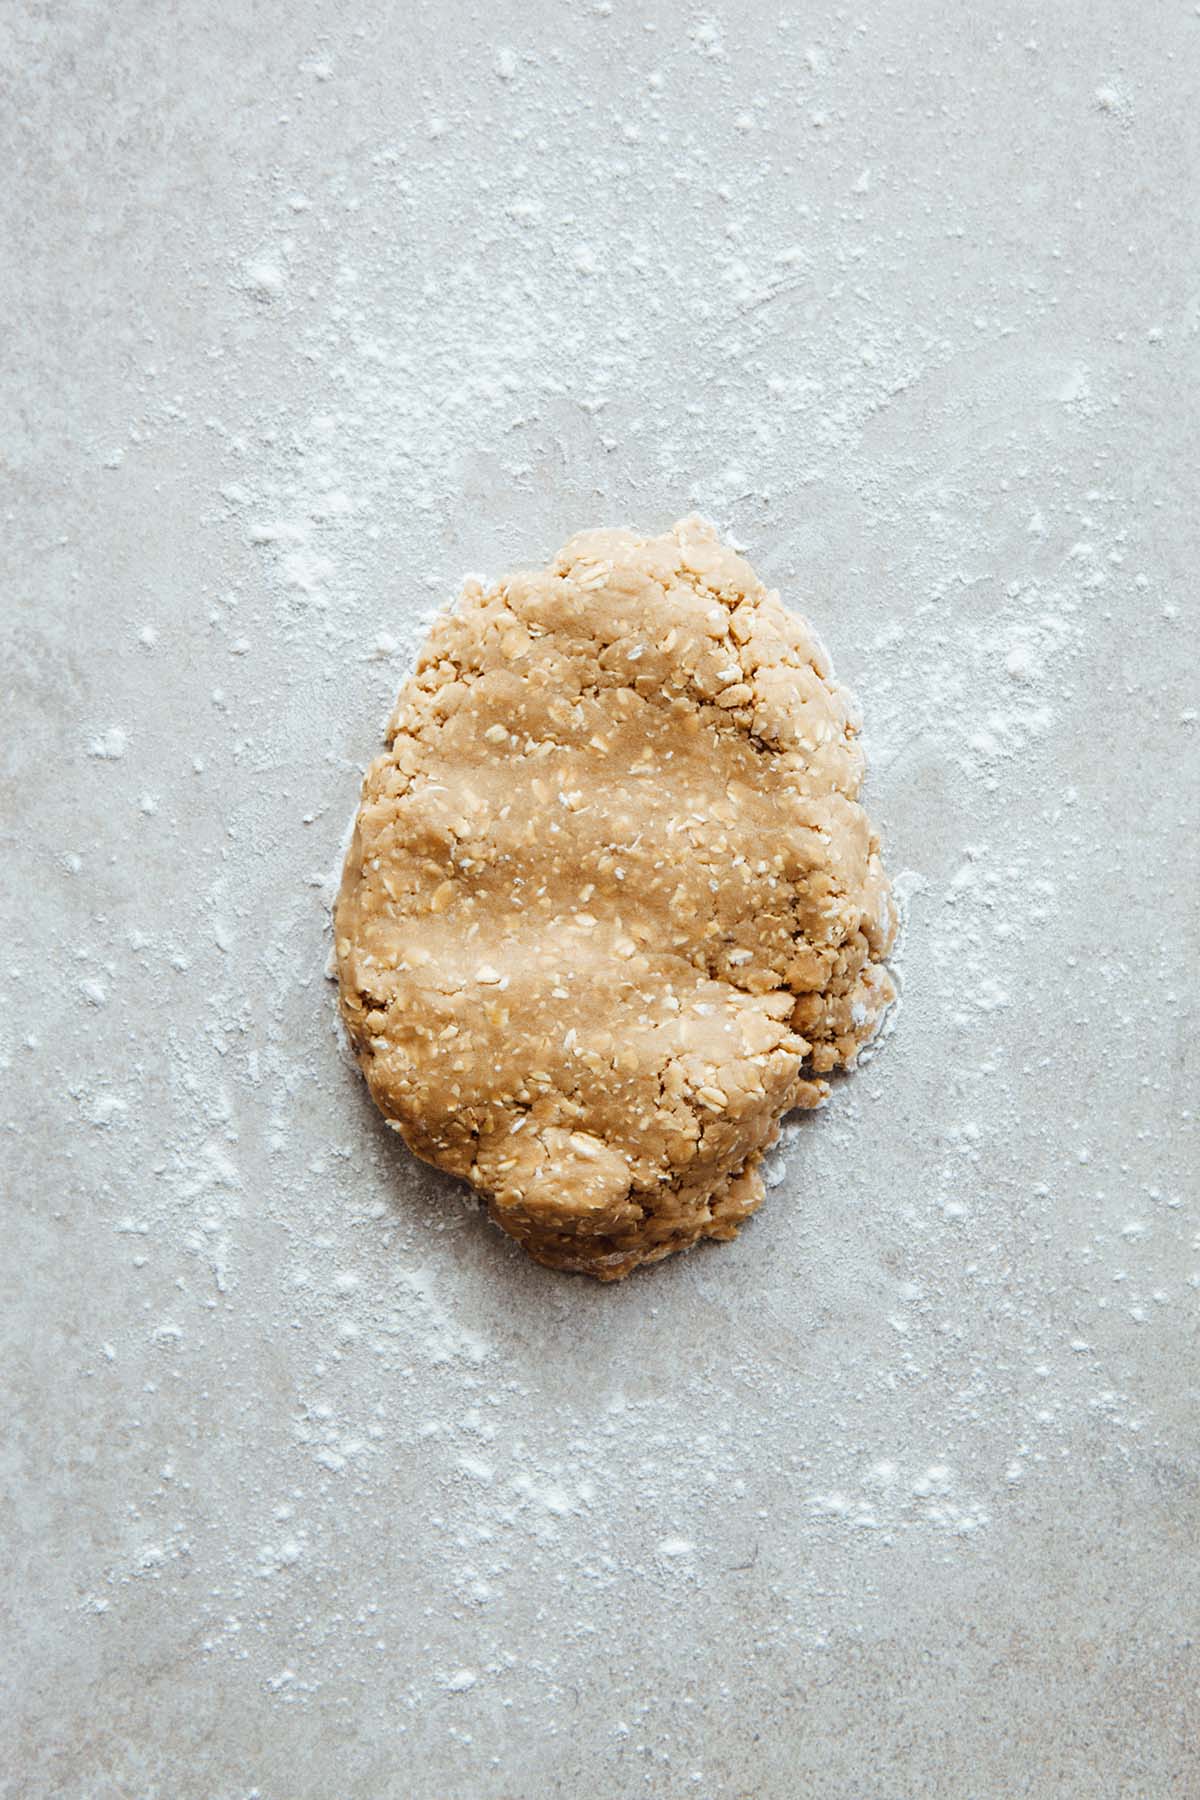 Cookie dough on a floured work surface.